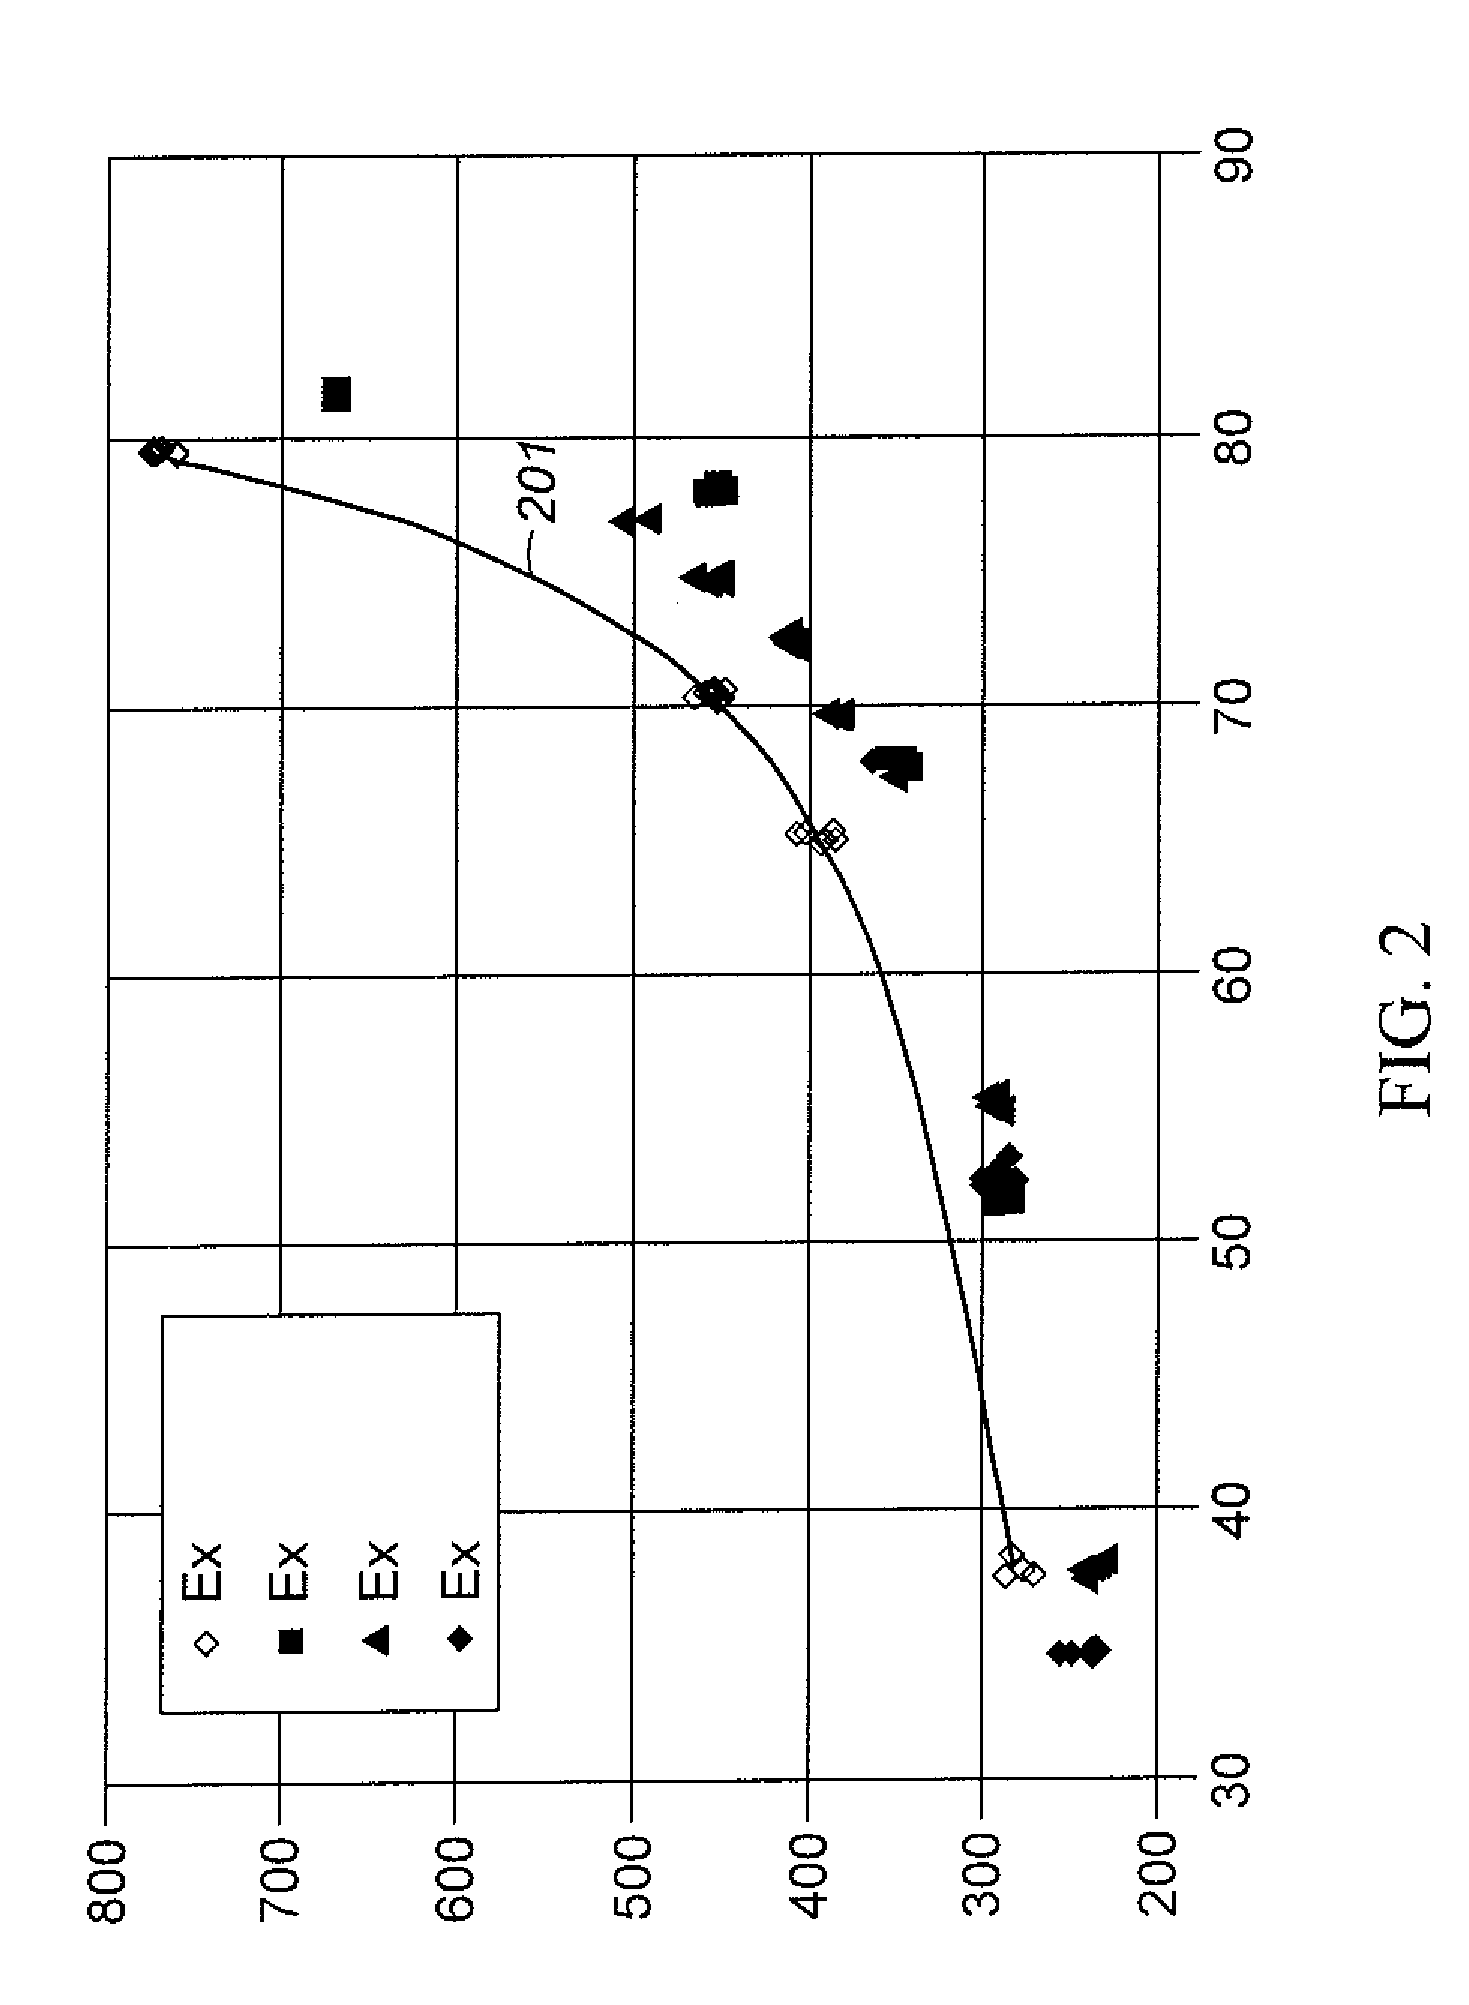 Aromatic transalkylation using a LZ-210 zeolite